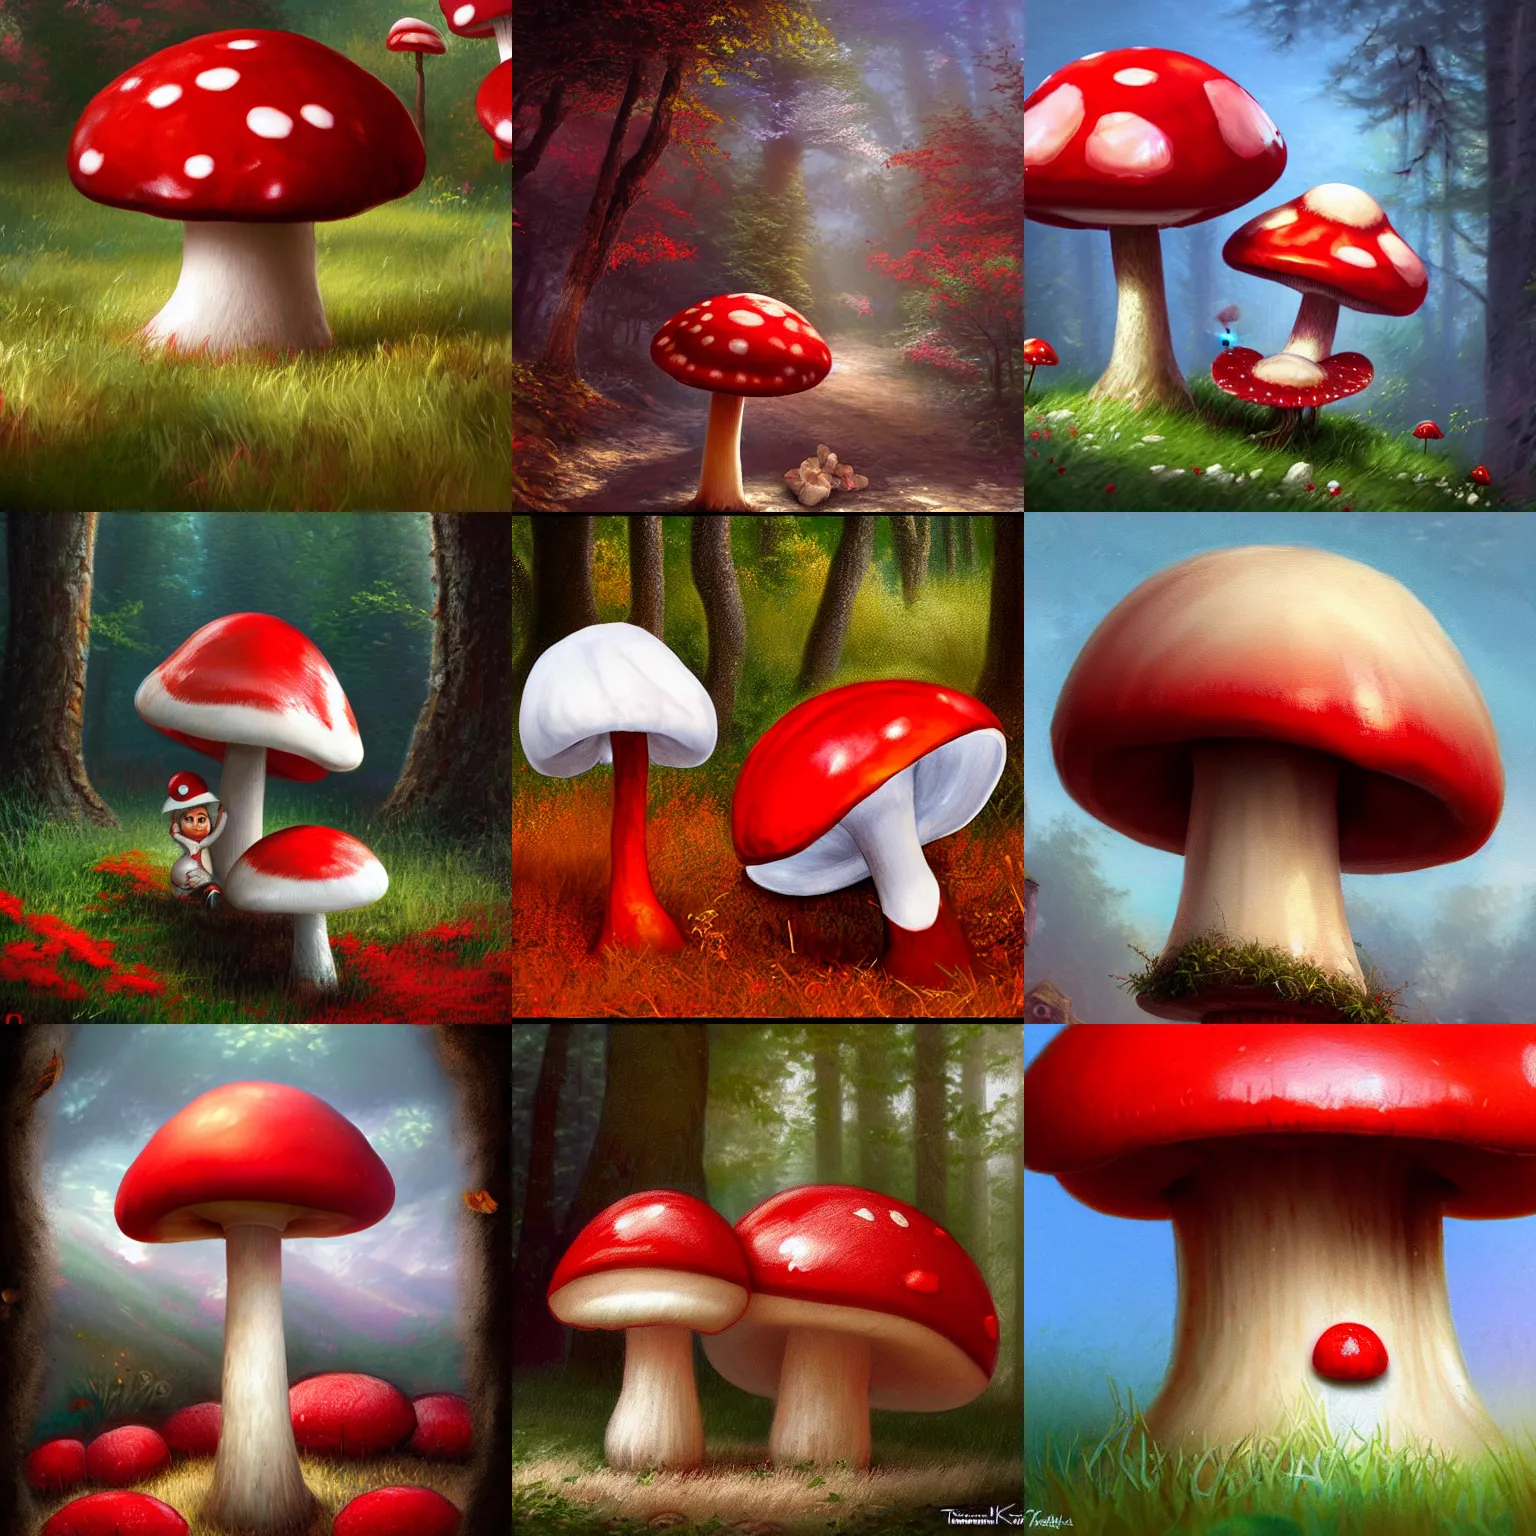 Prompt: Humanoid red and white mushroom by Thomas Kinkade, artstation, deviantart, 4k